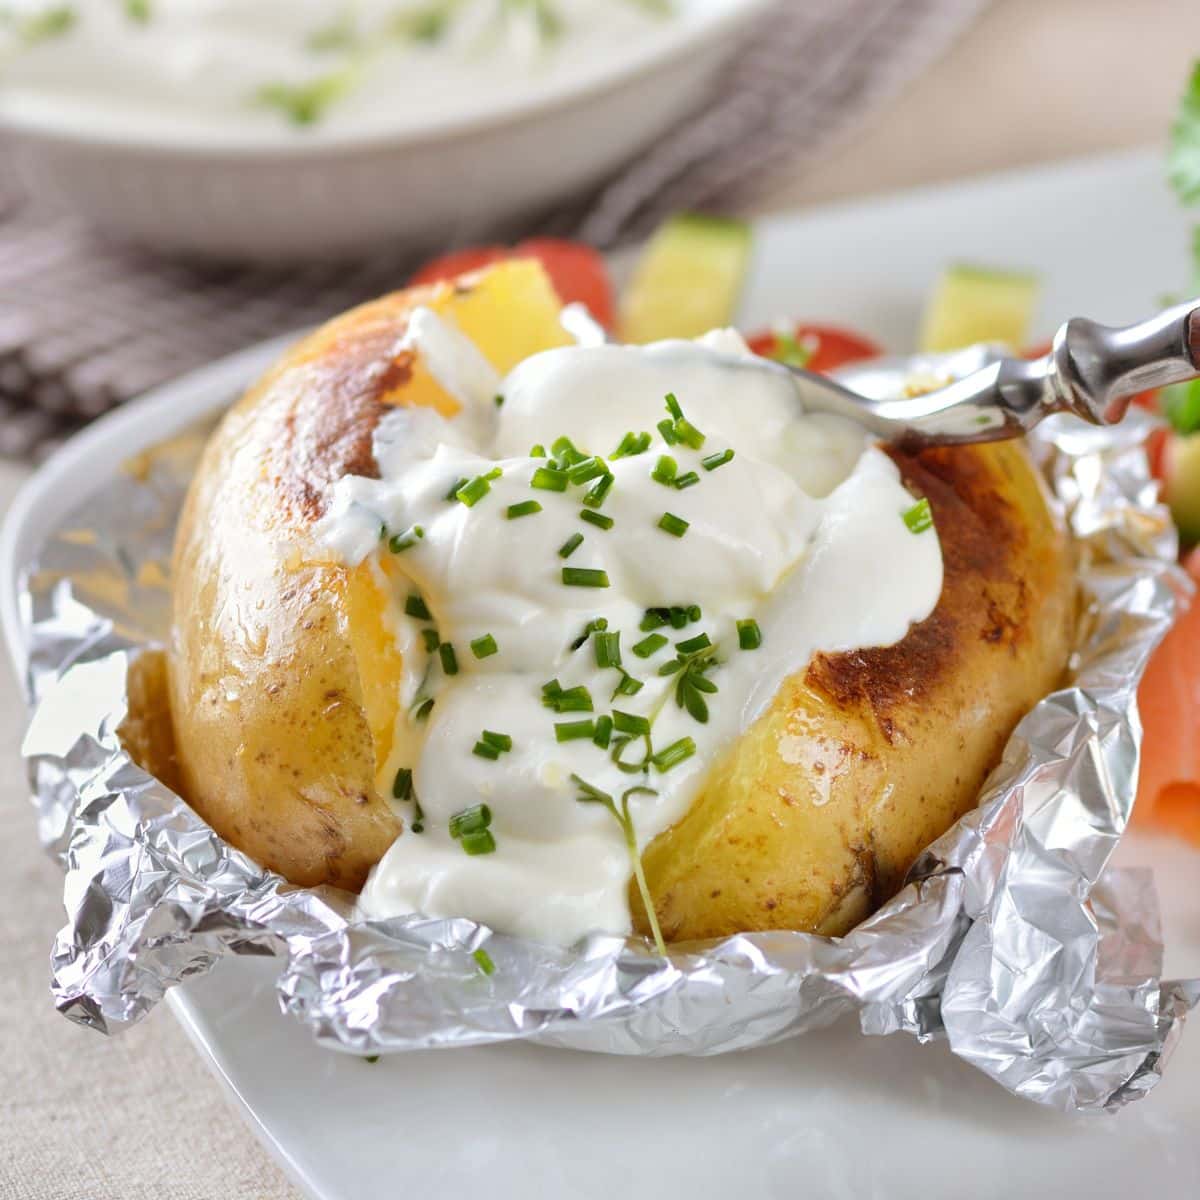 Gambar persegi menunjukkan kentang panggang di atas piring putih, dengan krim asam dan kucai.